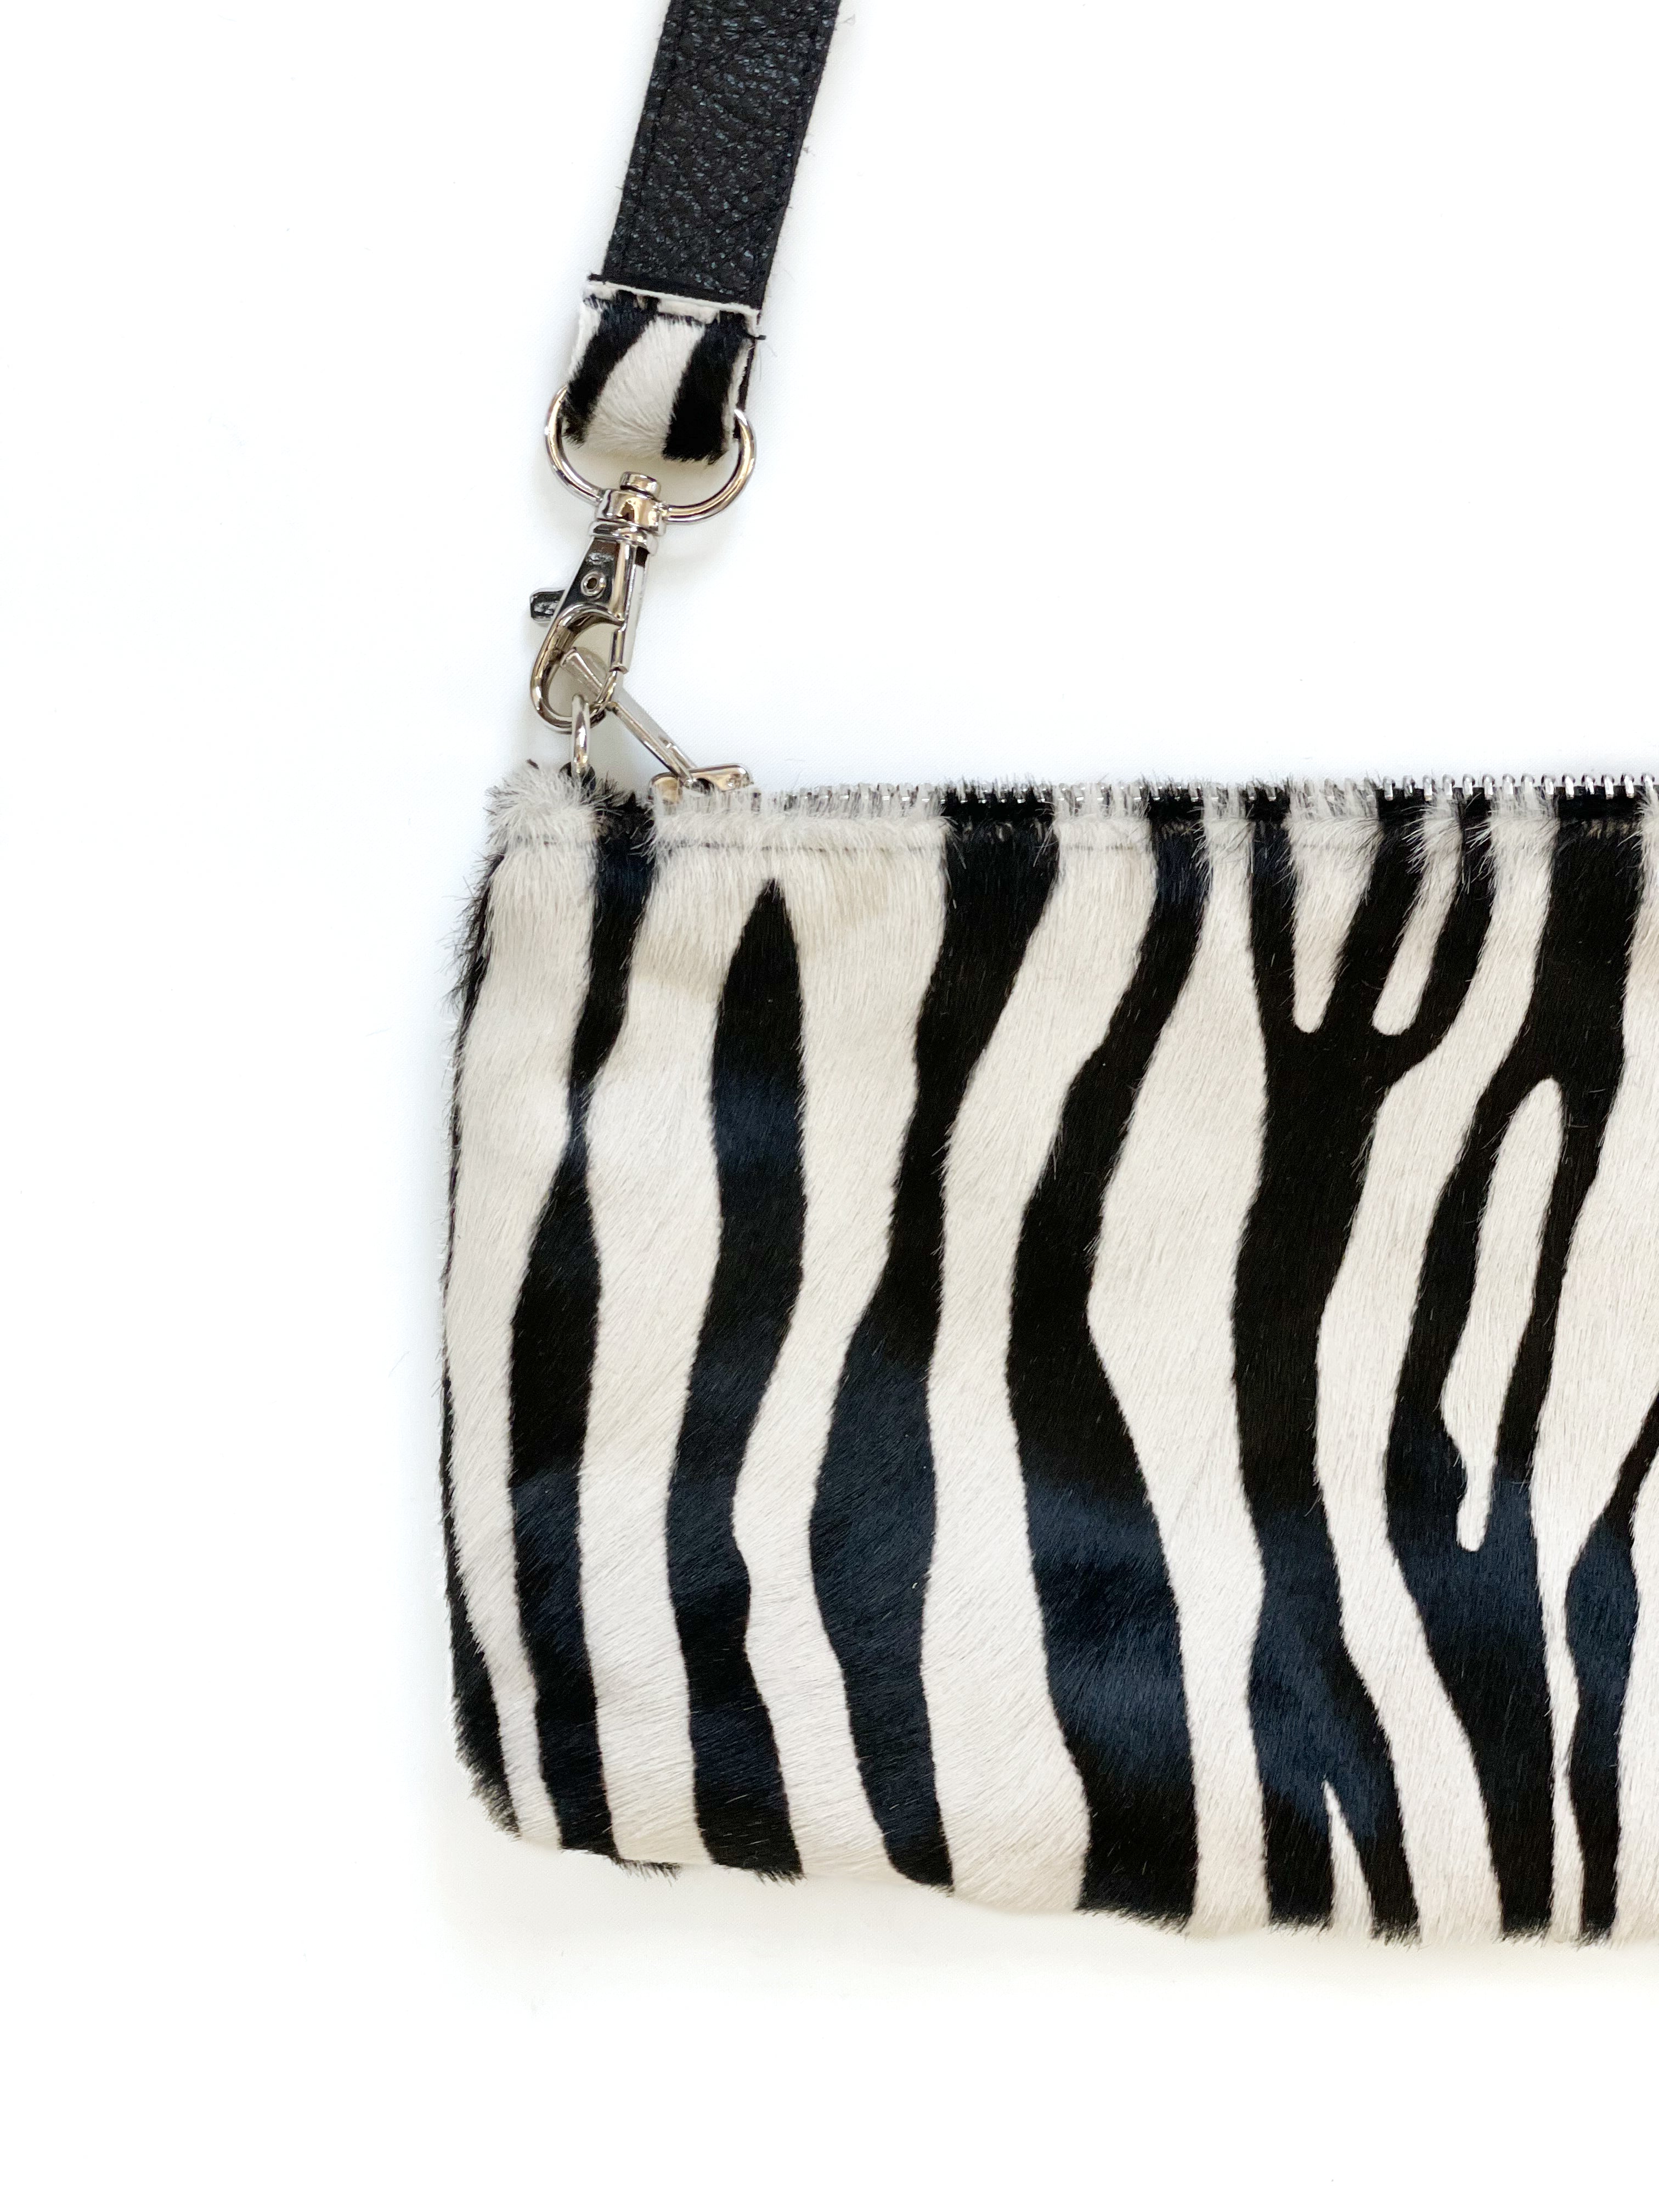 LUOZZY Women Clutch Bag Zebra Print Clutch PU Leather Shoulder Bags with  Buckle Flap Over Chain Shoulder Bags Animal Purse Strap: Handbags:  Amazon.com